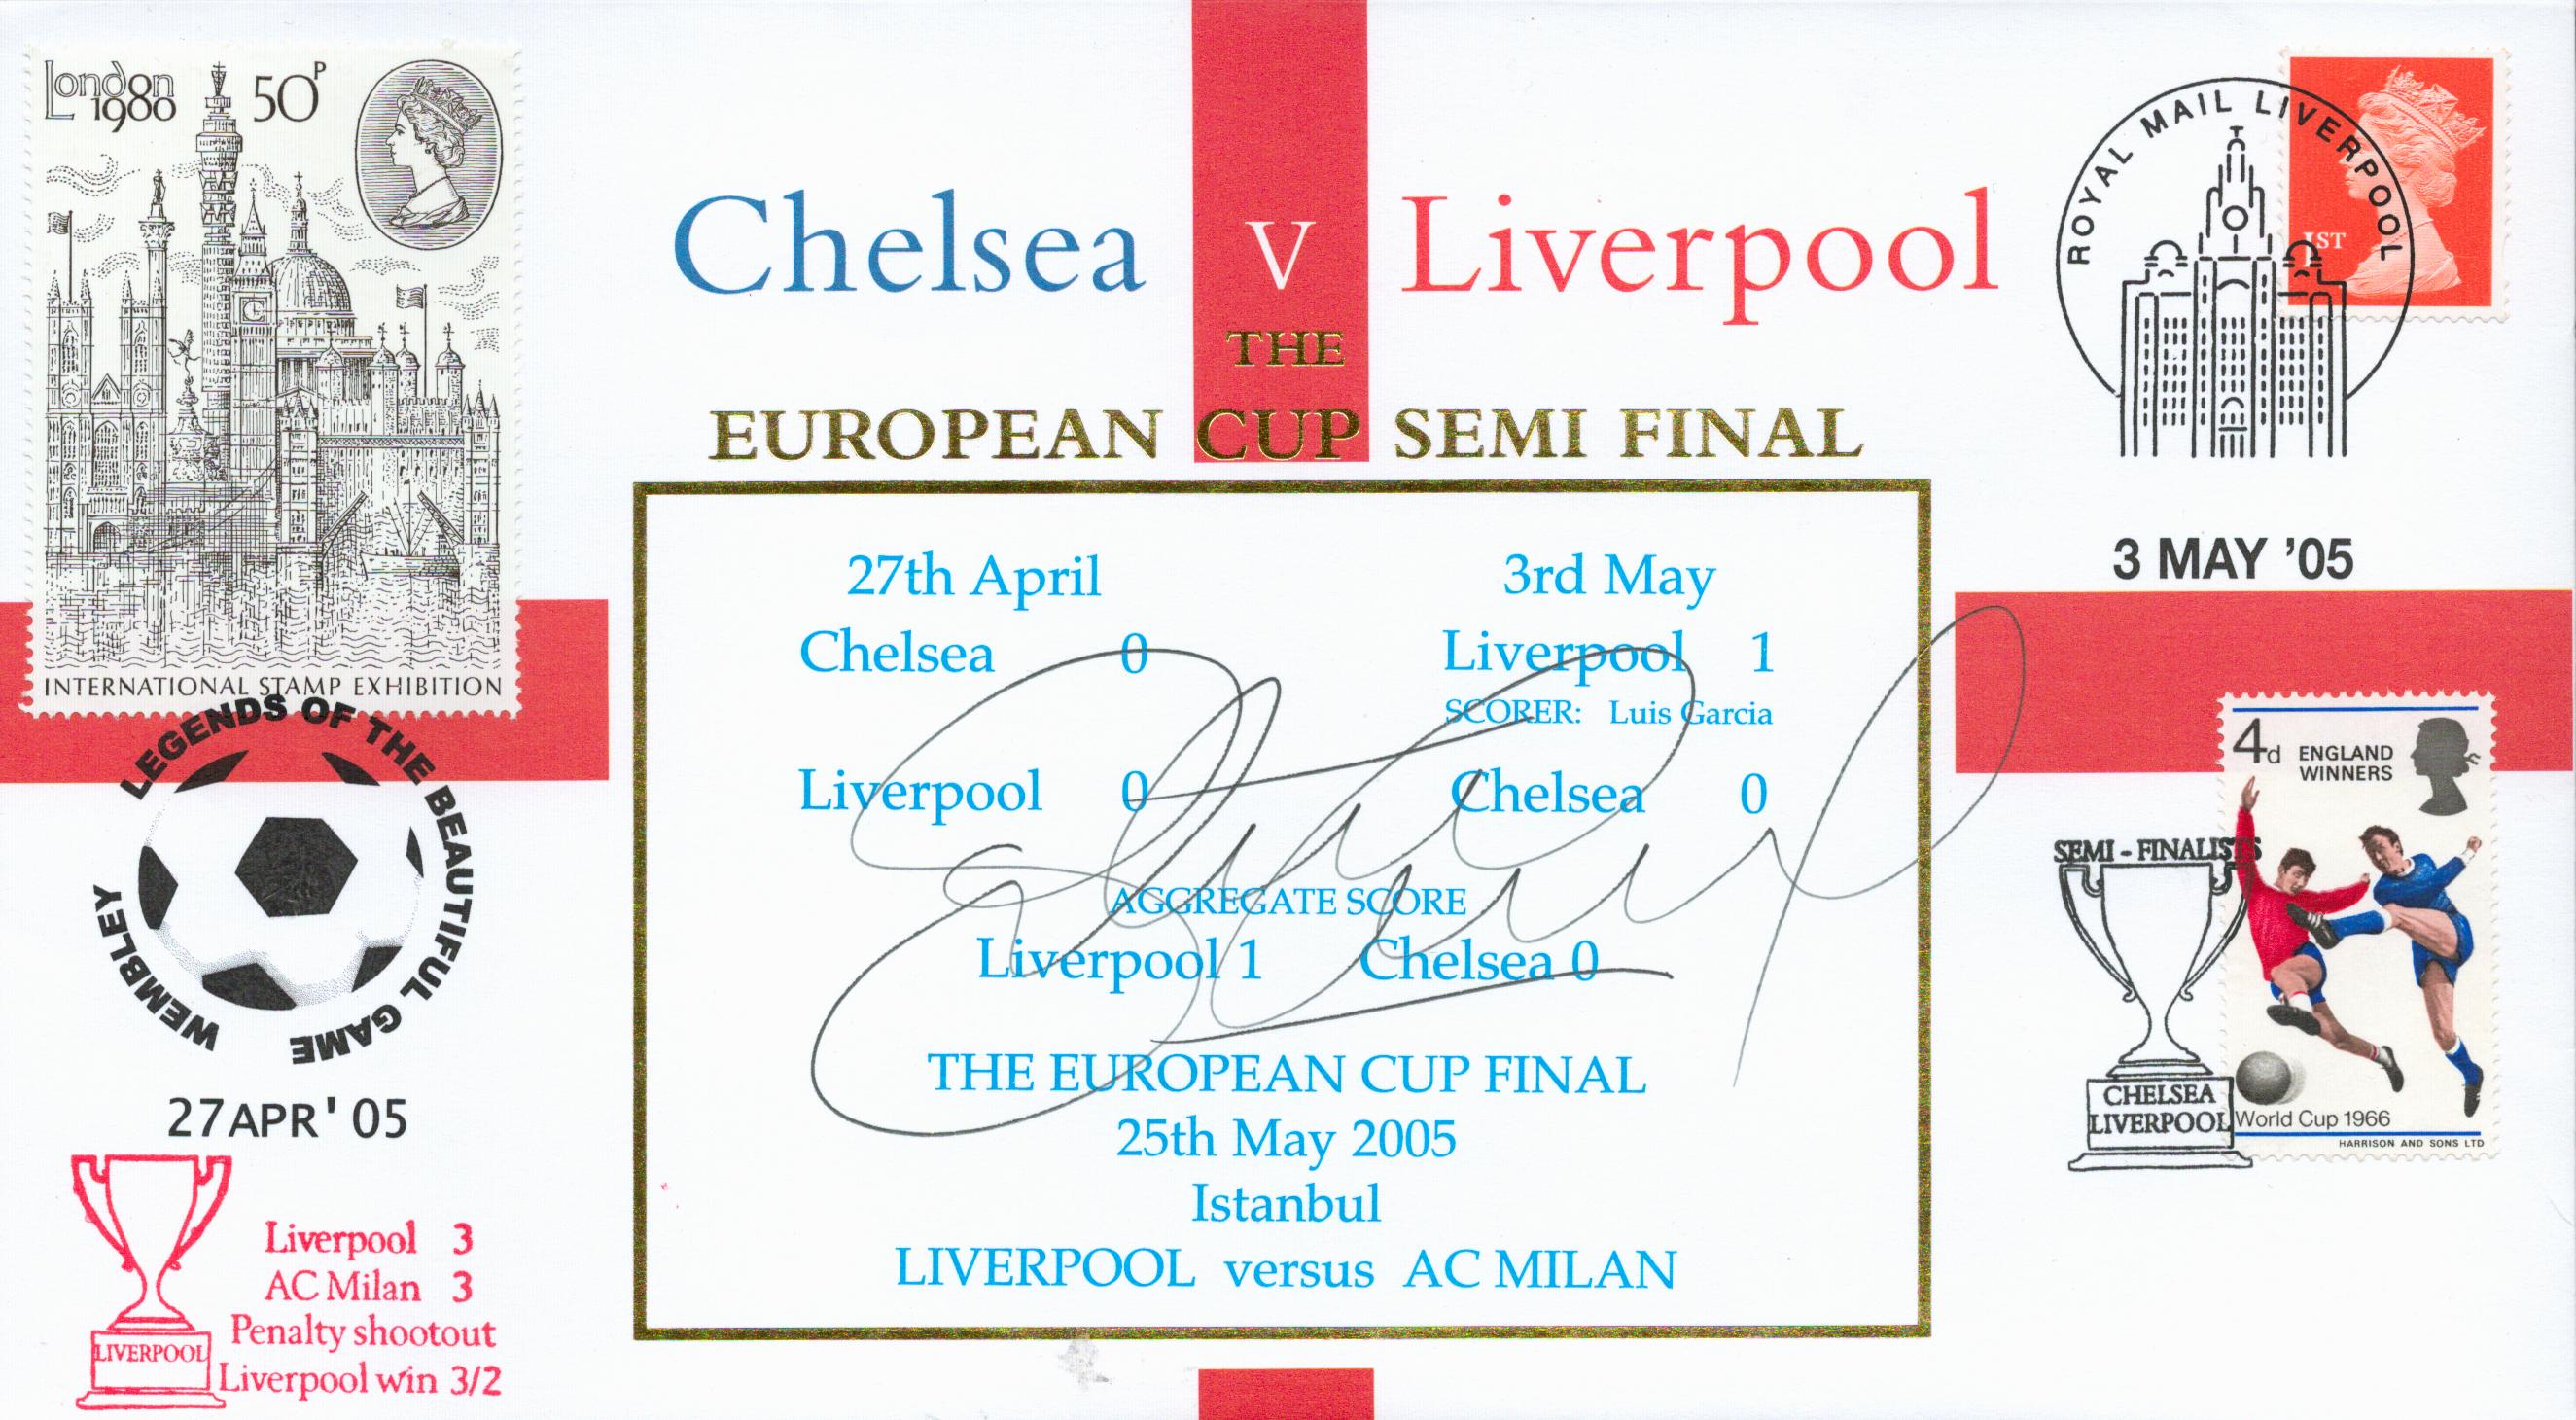 Steven Gerrard signed 2005 Chelsea Liverpool European Semi Final Internetstamps football cover. Good